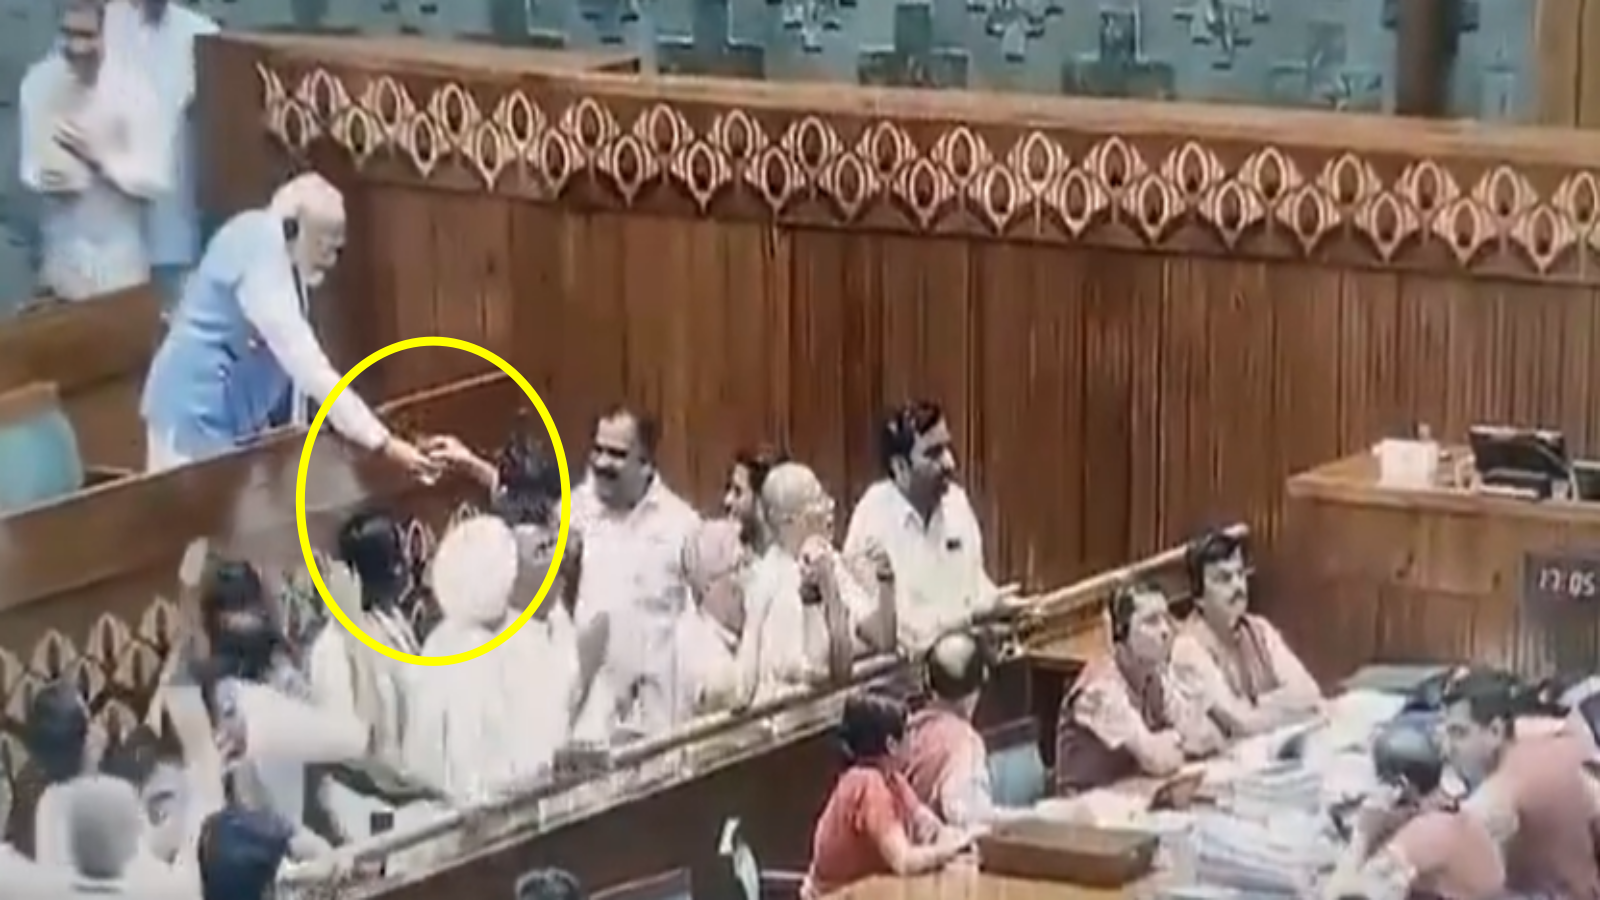 PM Modi offers water to Congress MPs shouting 'taanashahi nahi chalegi' in Lok Sabha: Watch viral video 